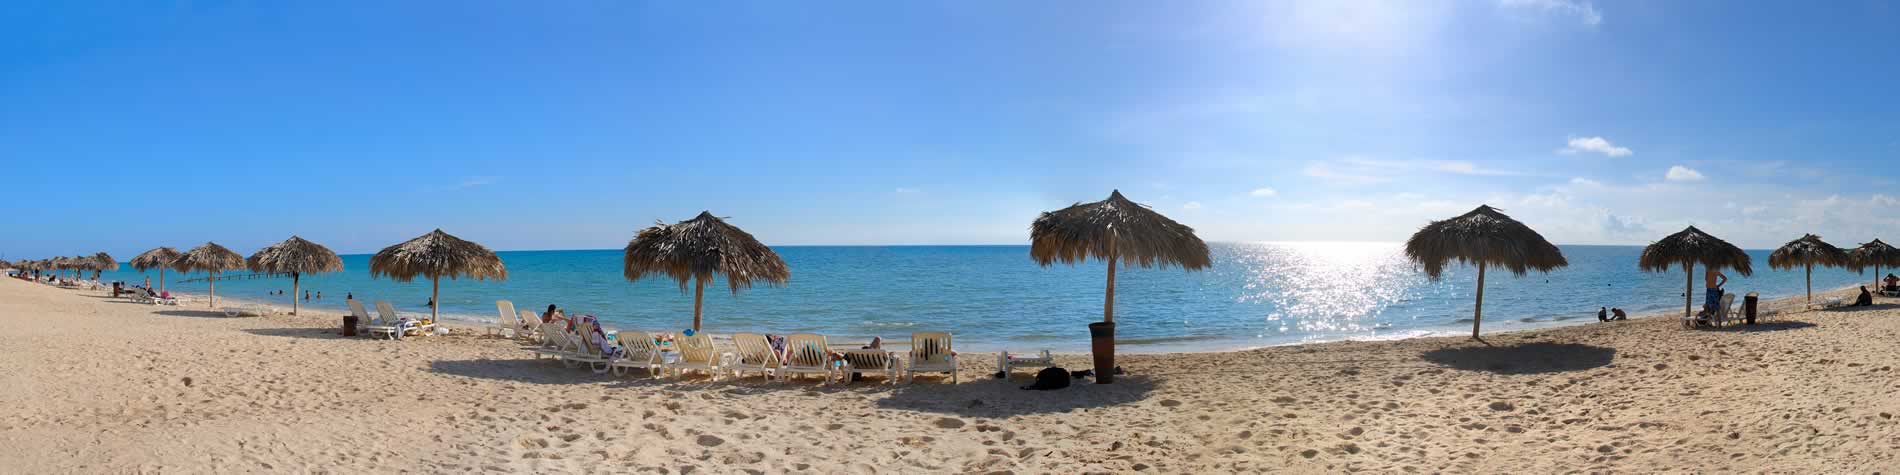 view of playa ancon beach